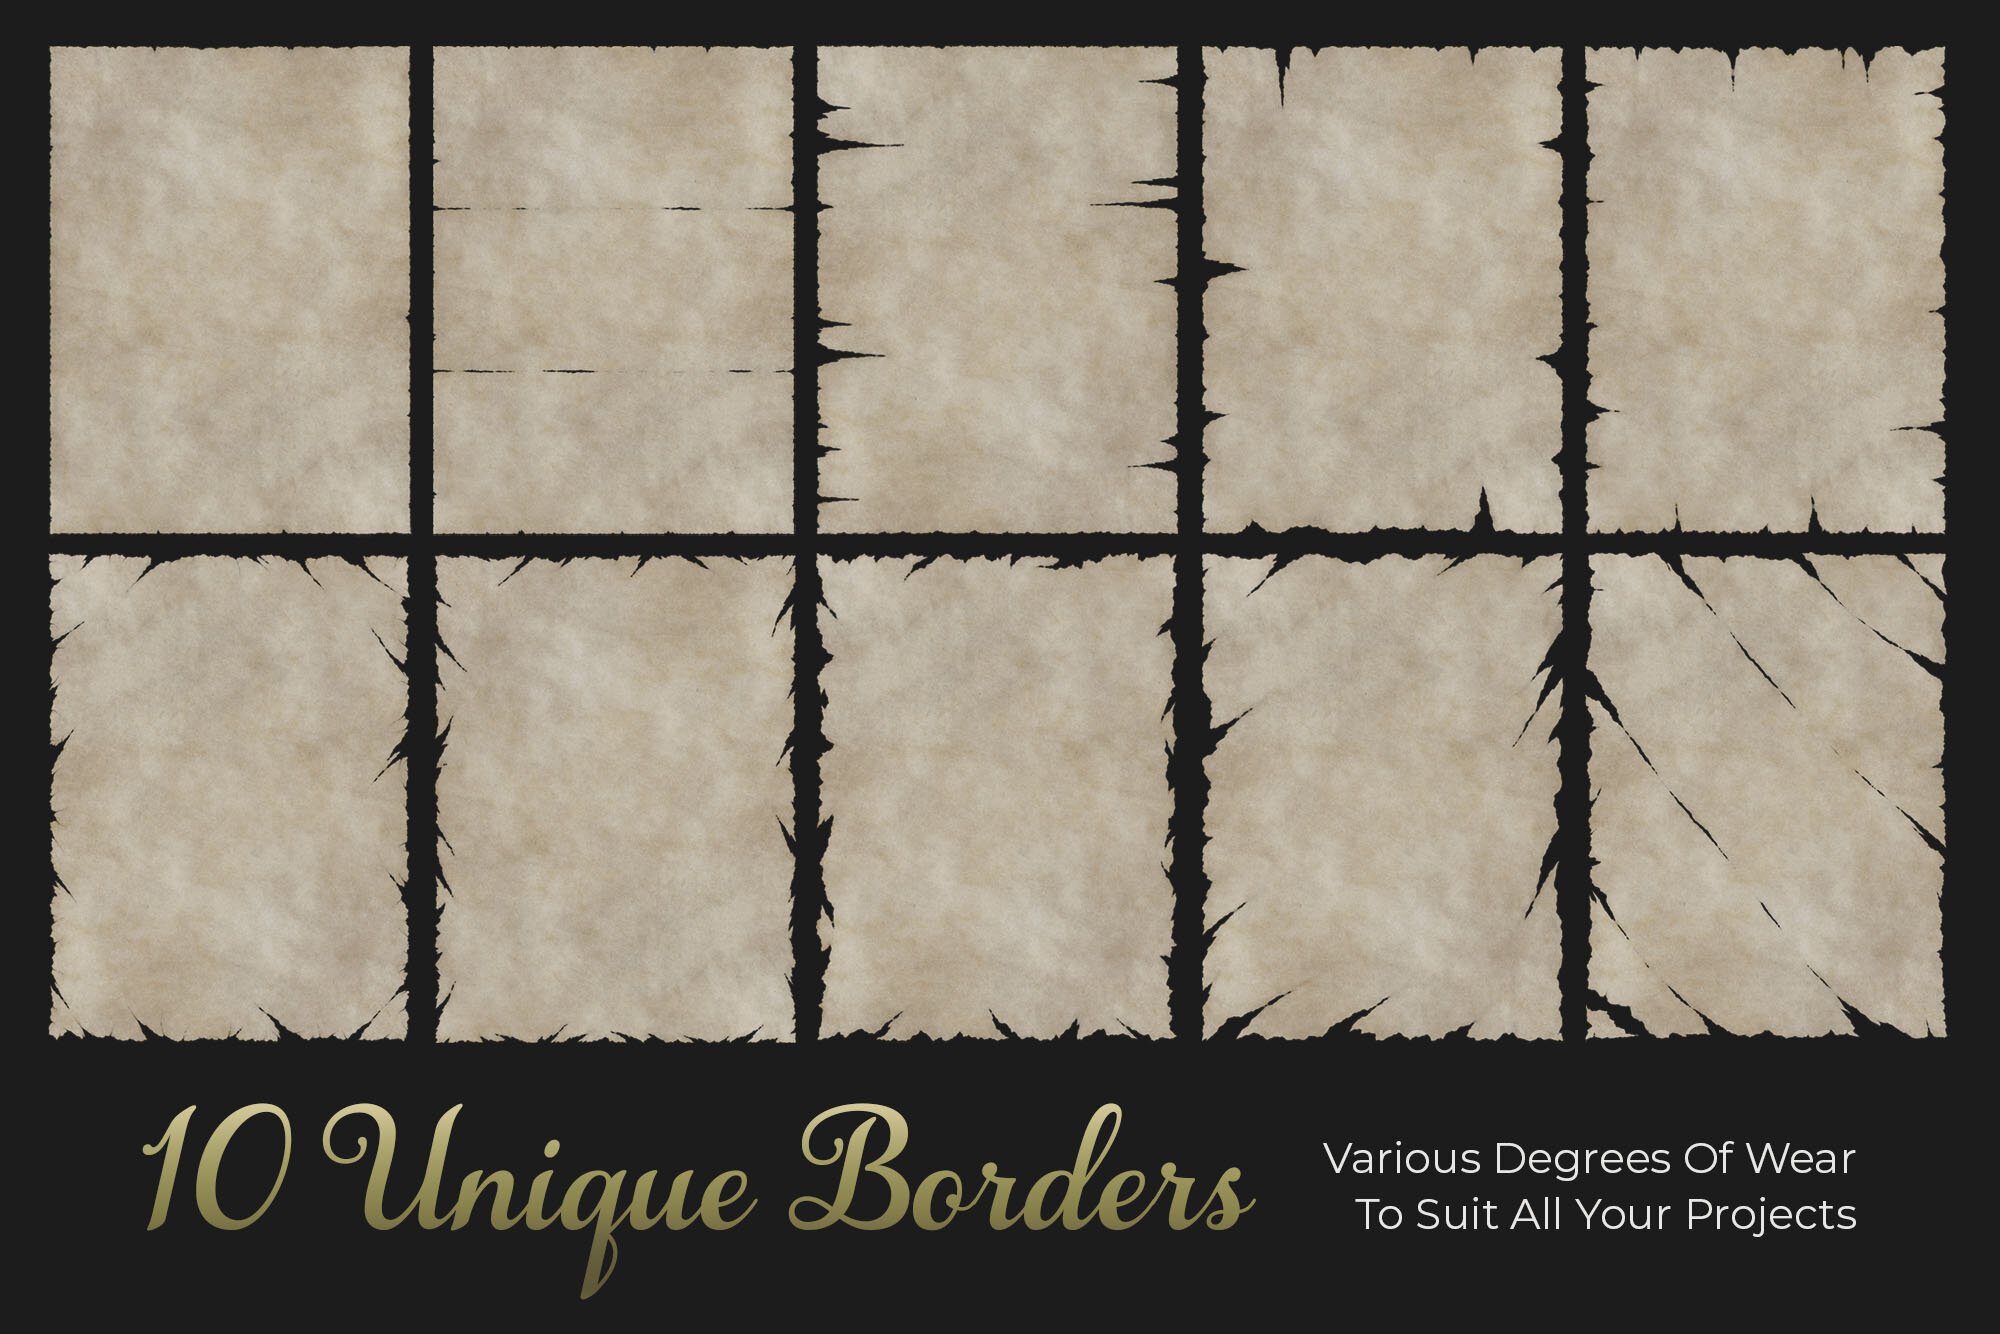 Ancient-Borders-Samples.jpg